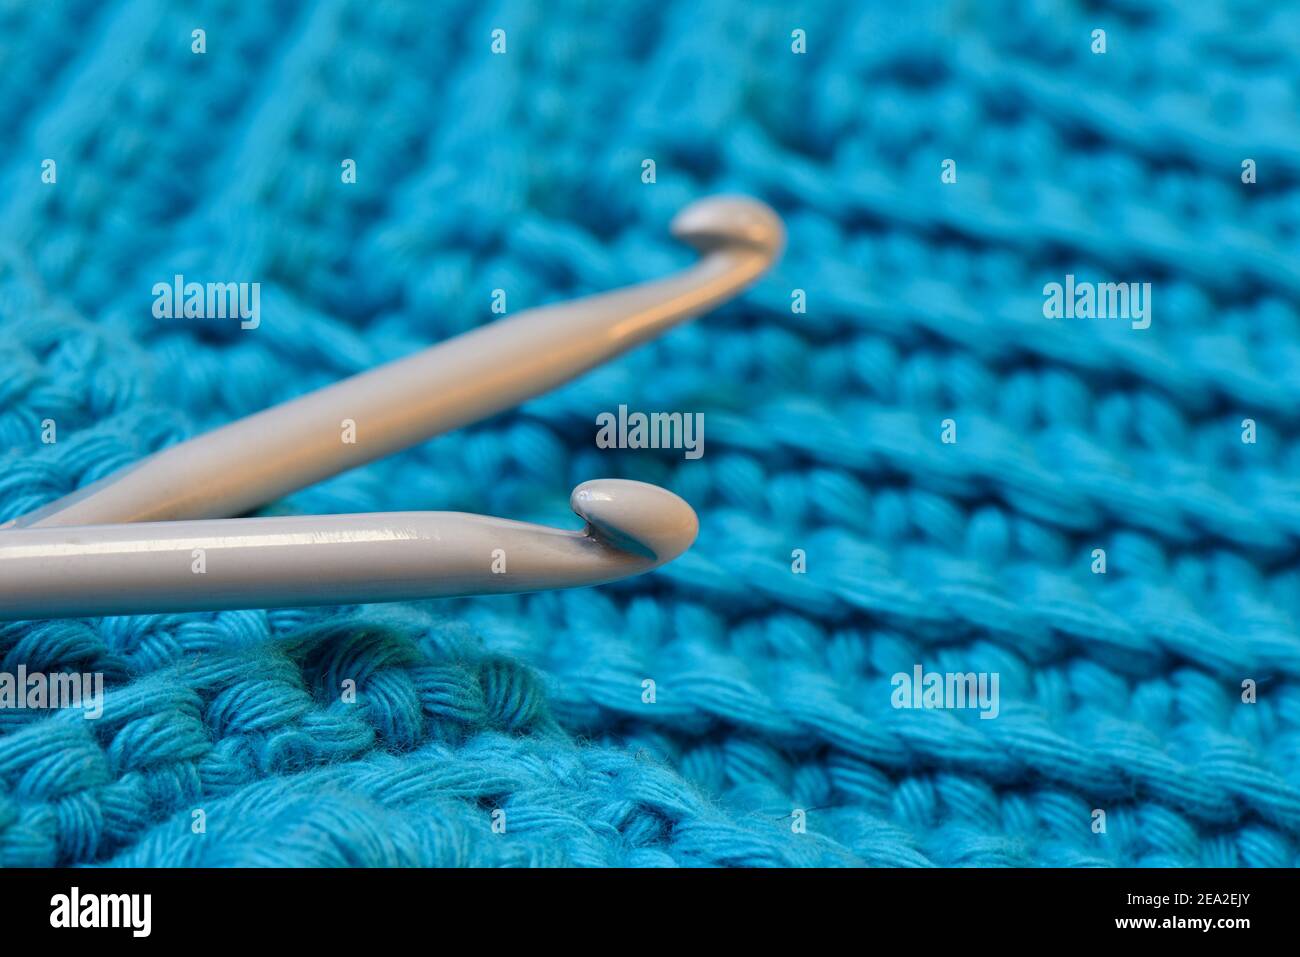 Crochet hooks with potholders Stock Photo